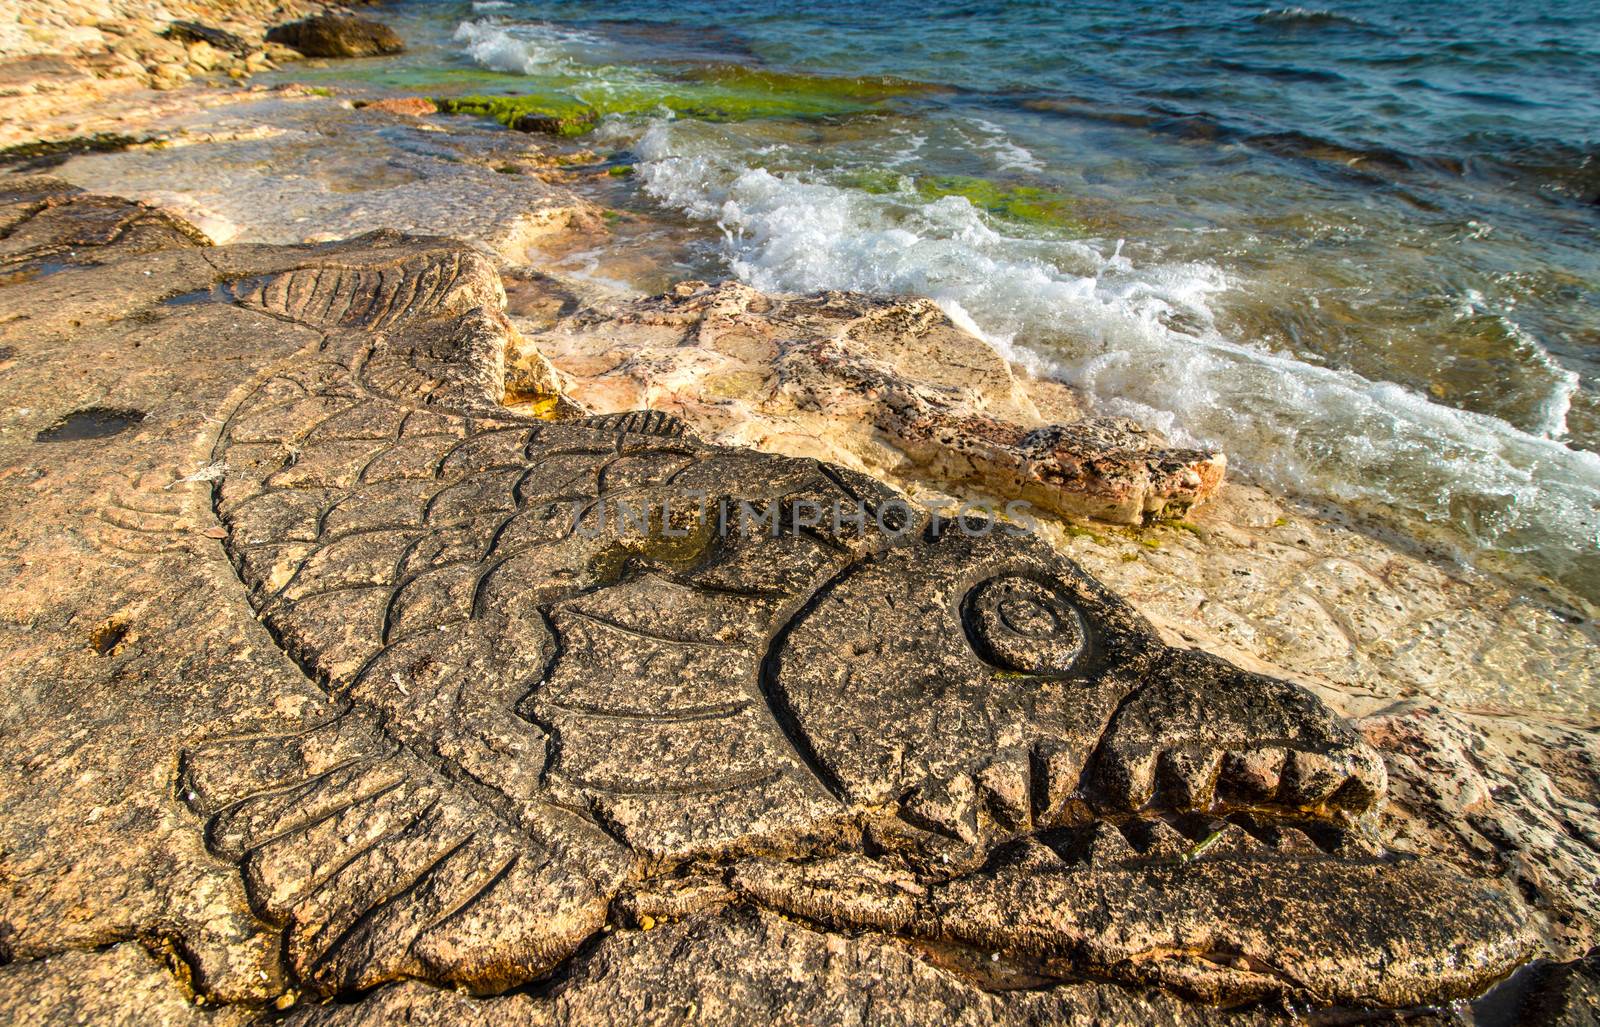 Rock carvings on the beach (big fish head) near Sevastopol (Crimea), Ukraine, May 2013